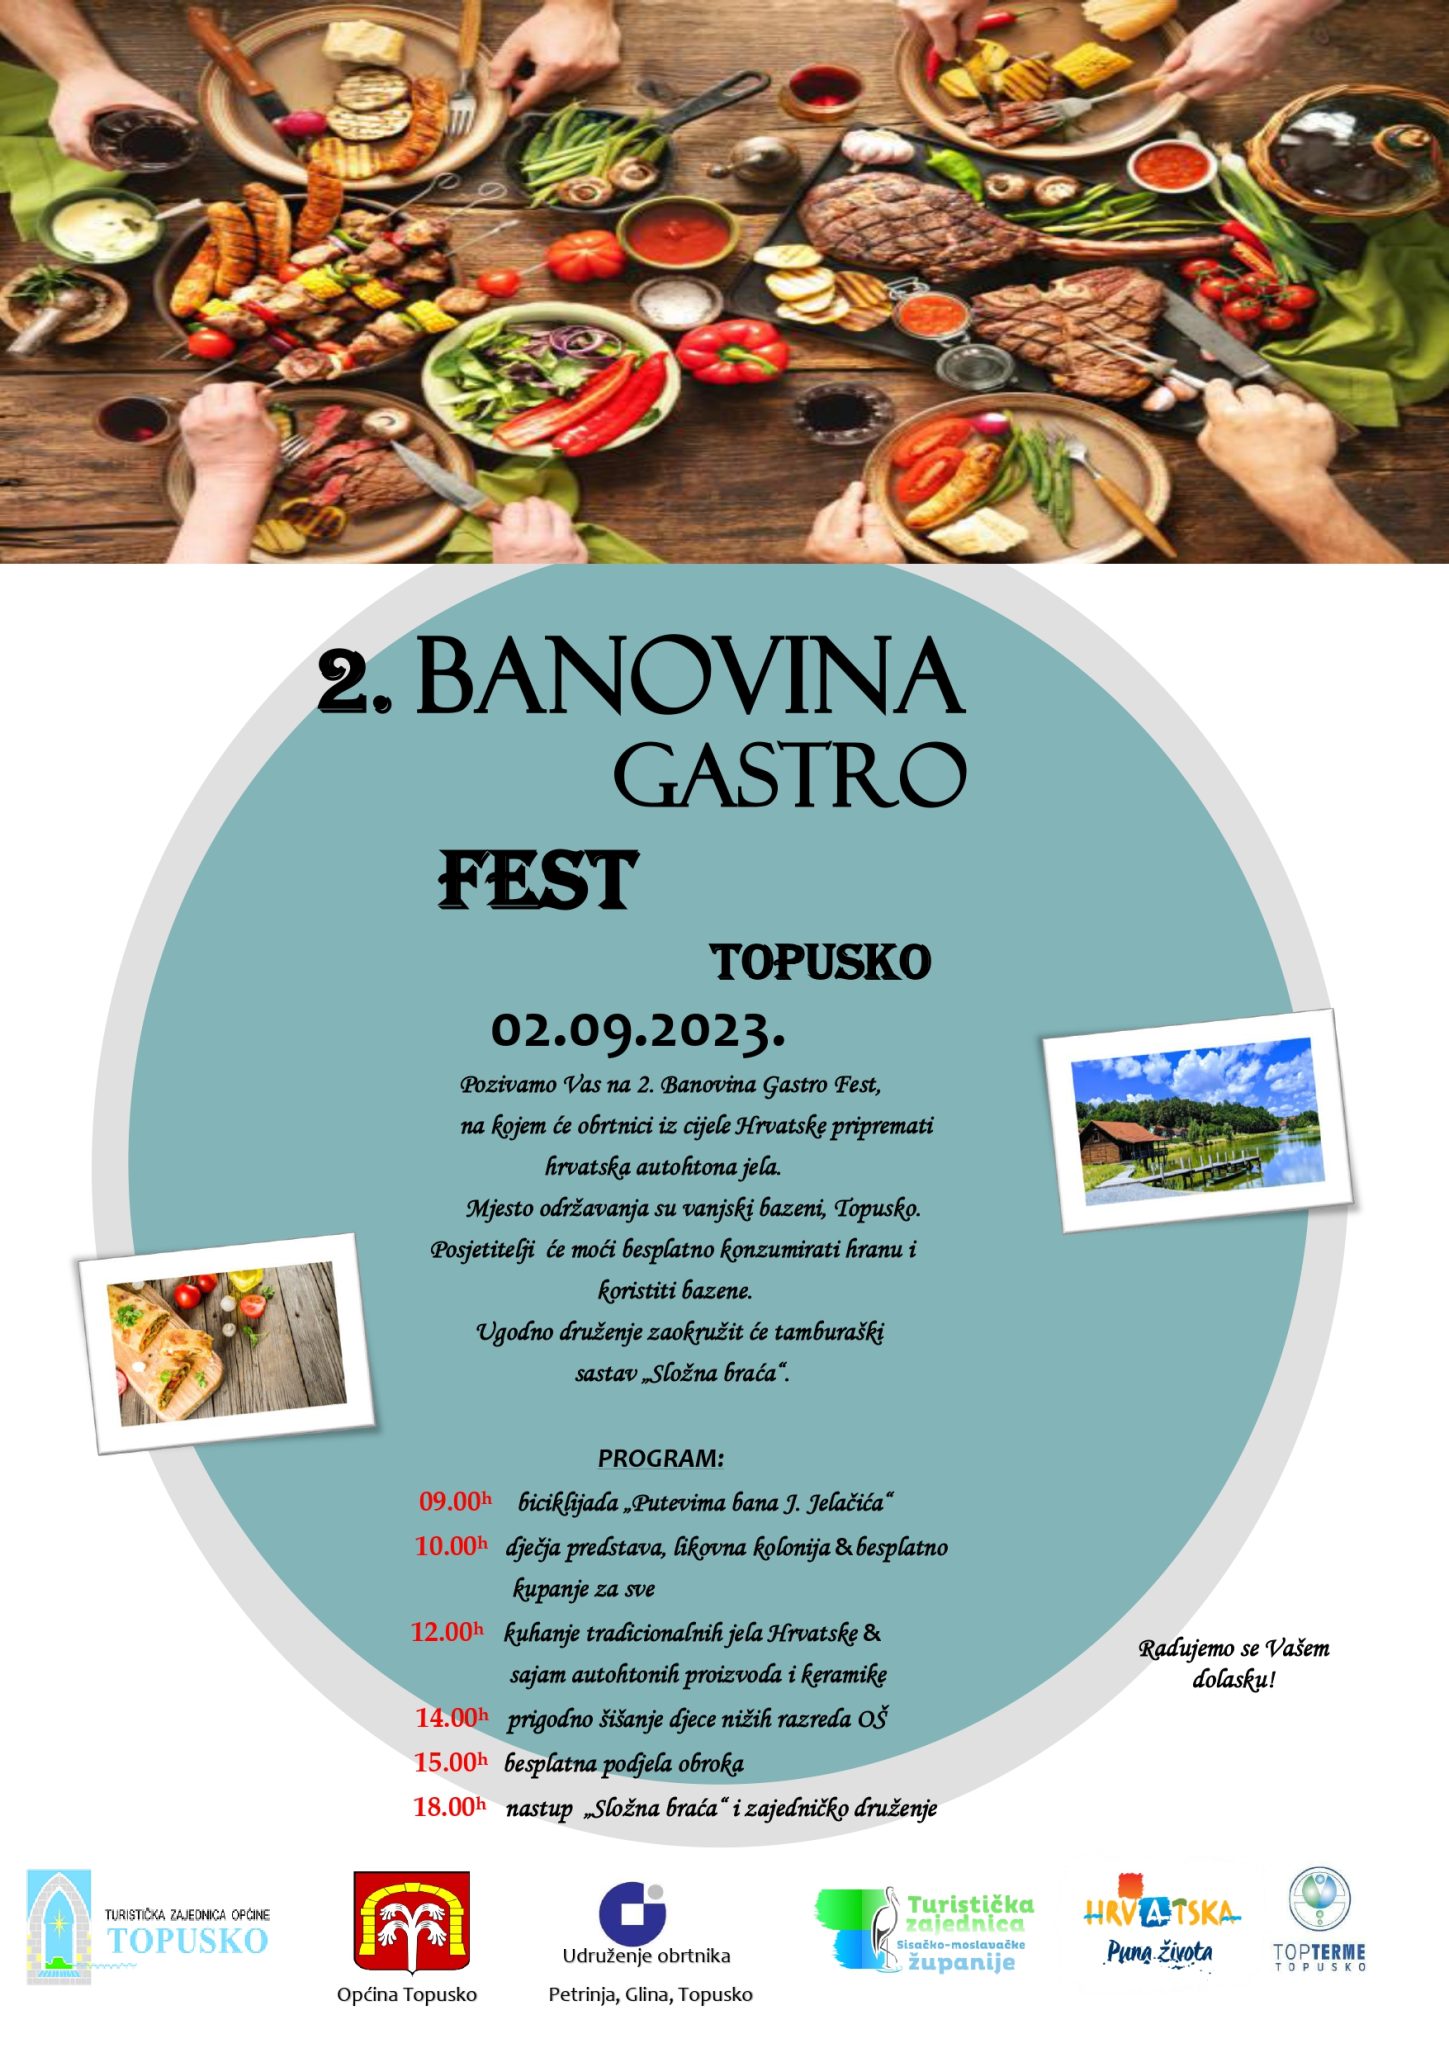 2. BANOVINA GASTRO FEST 02.09.2023.